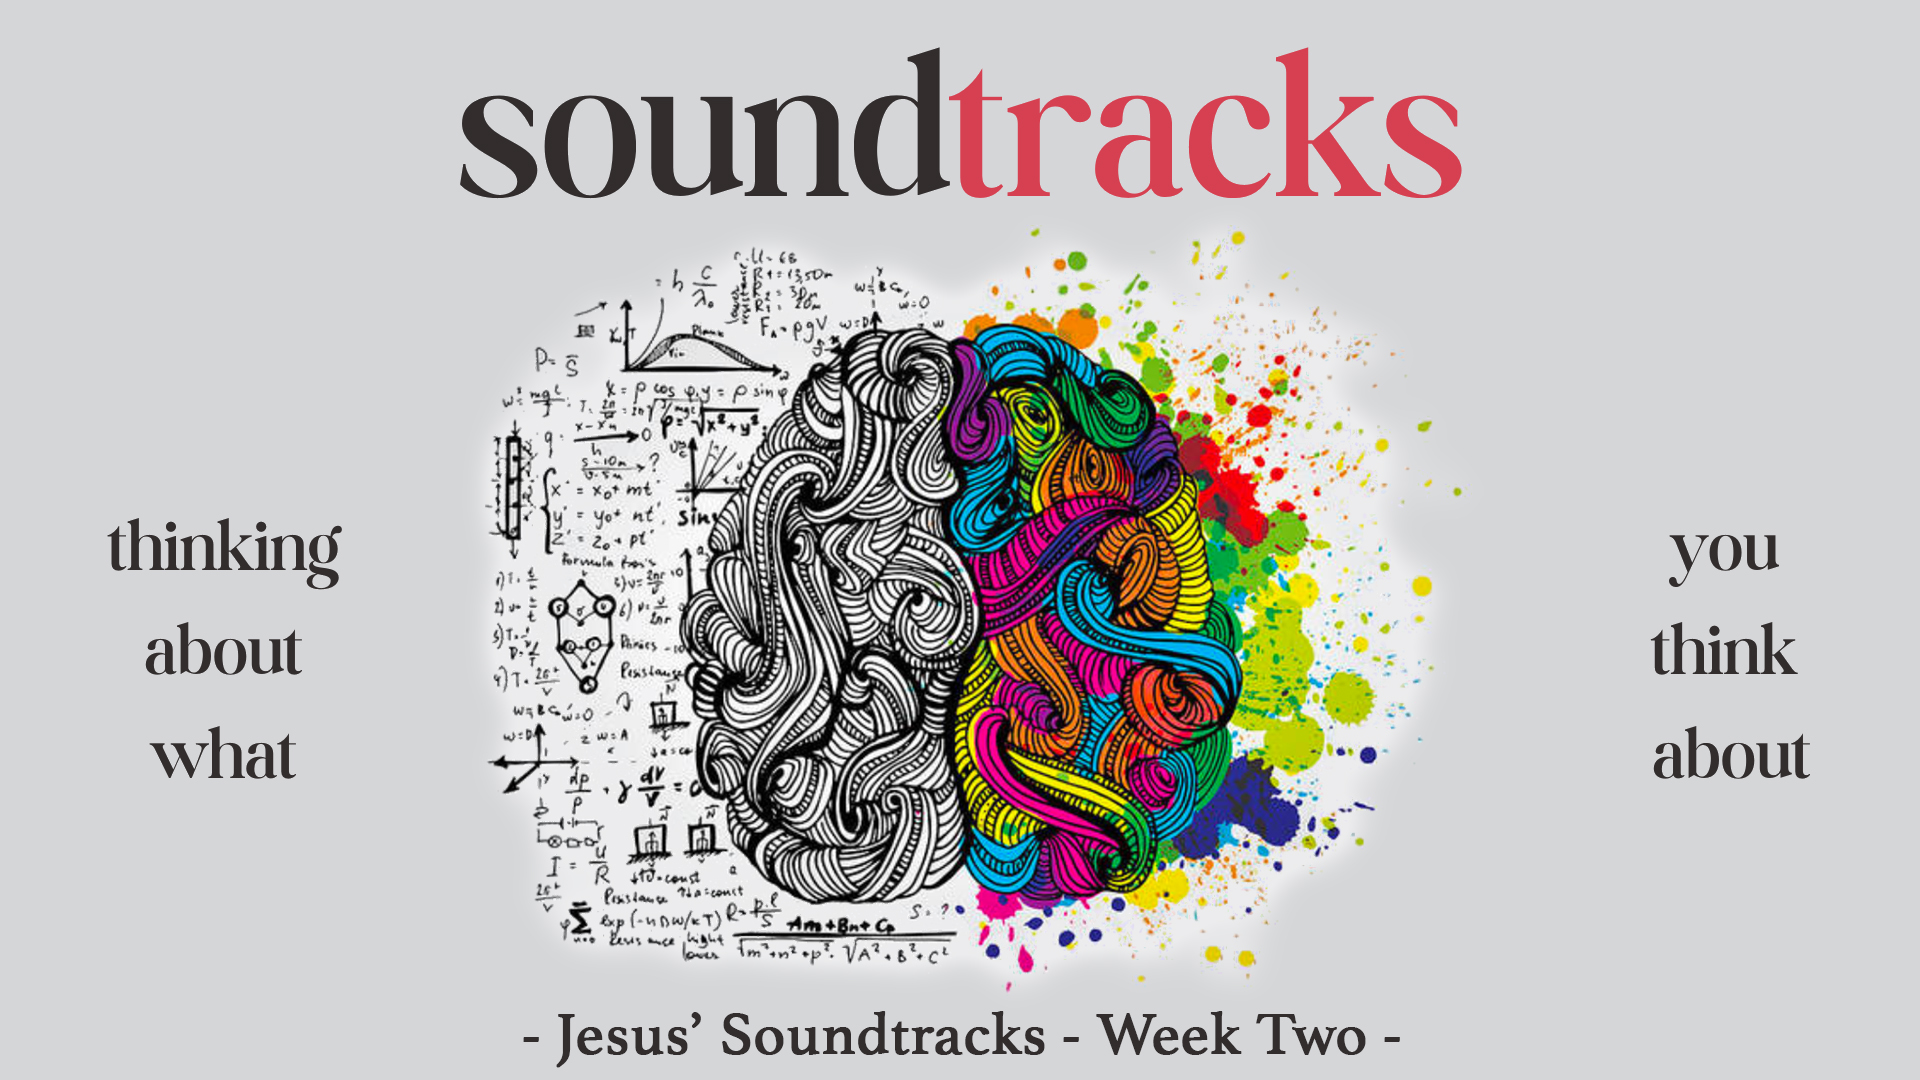 Jesus’ Soundtracks - Week Two